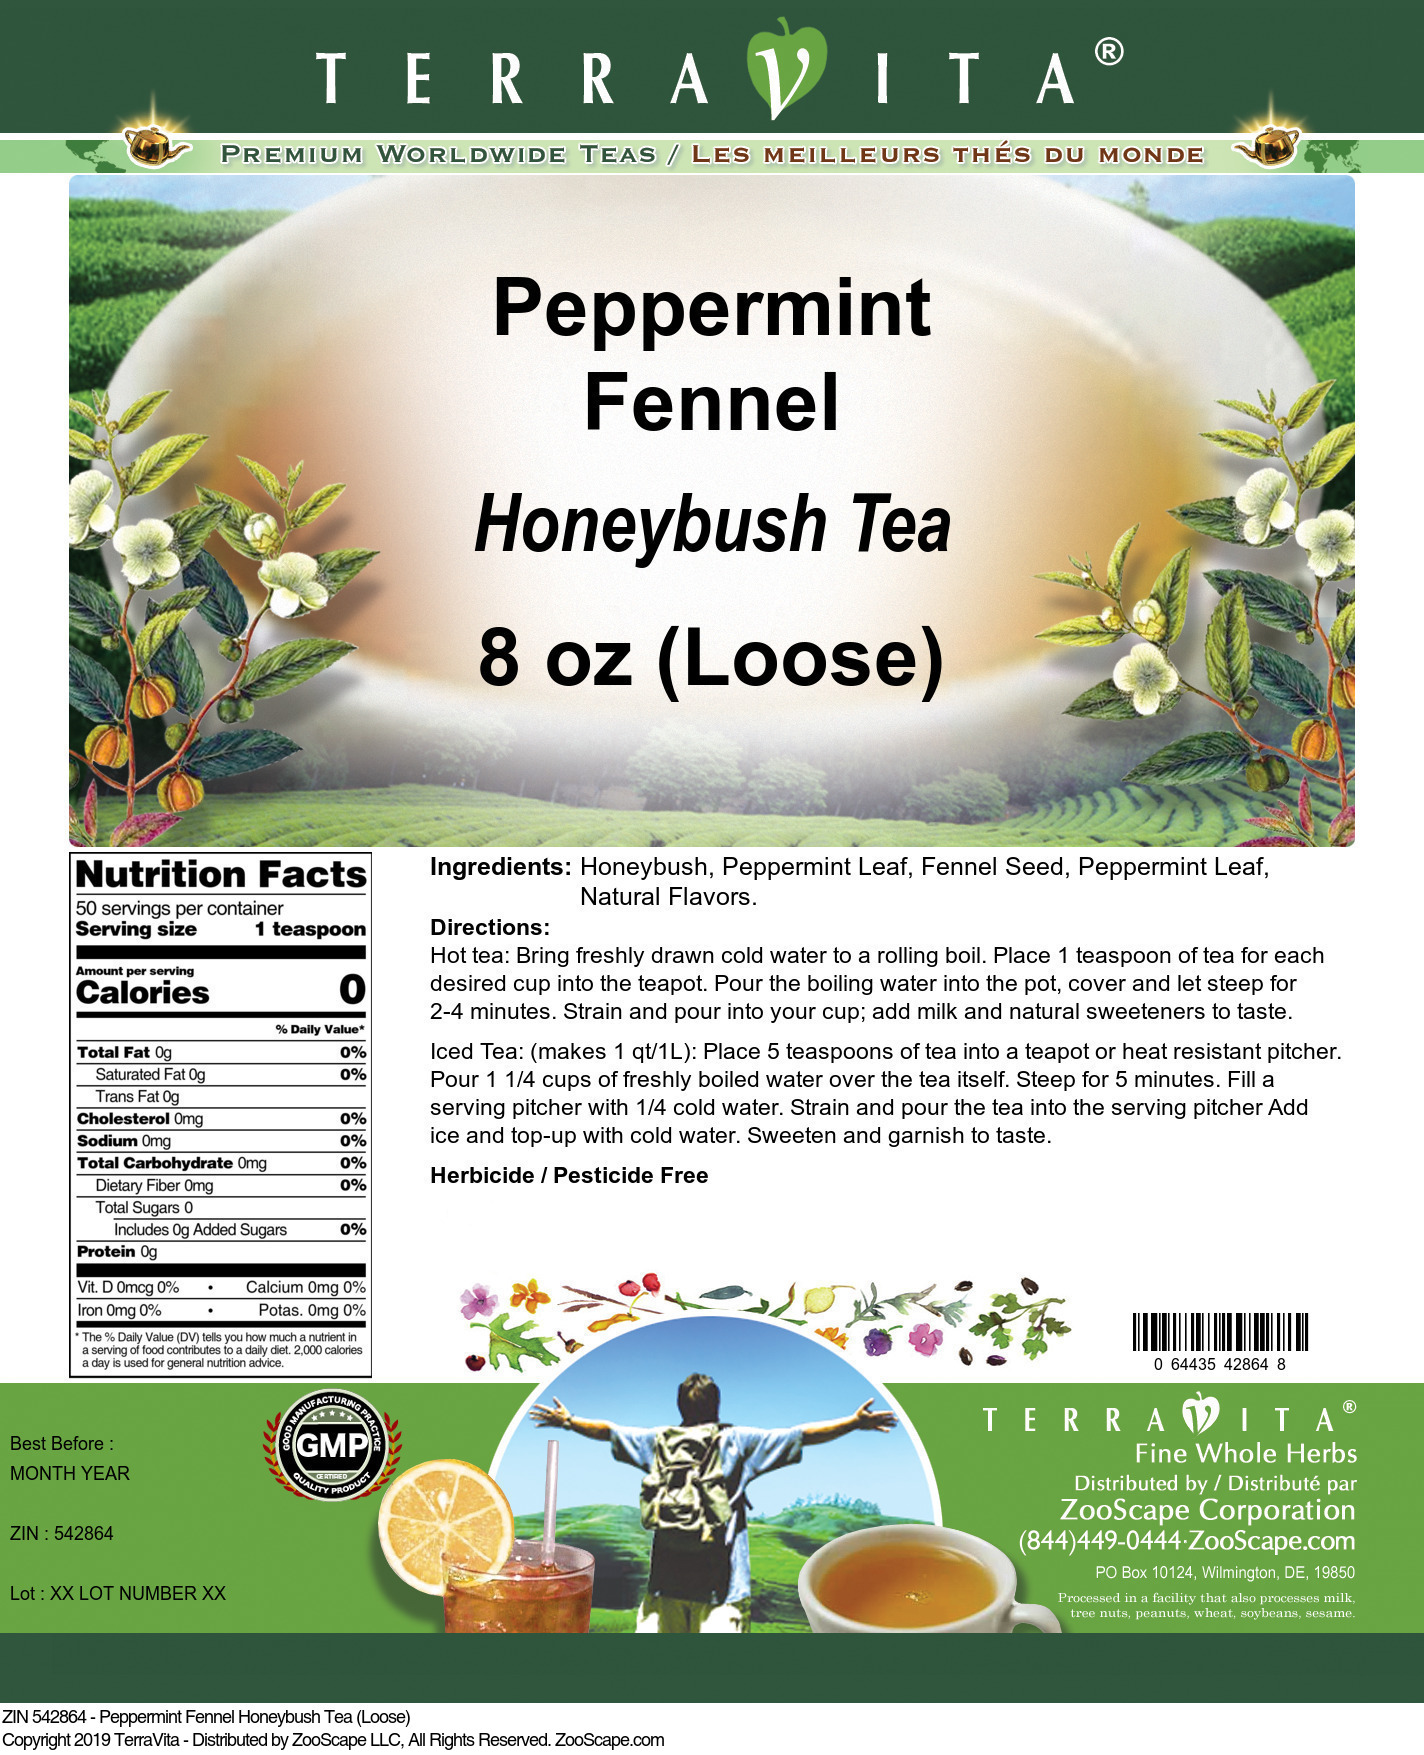 Peppermint Fennel Honeybush Tea (Loose) - Label